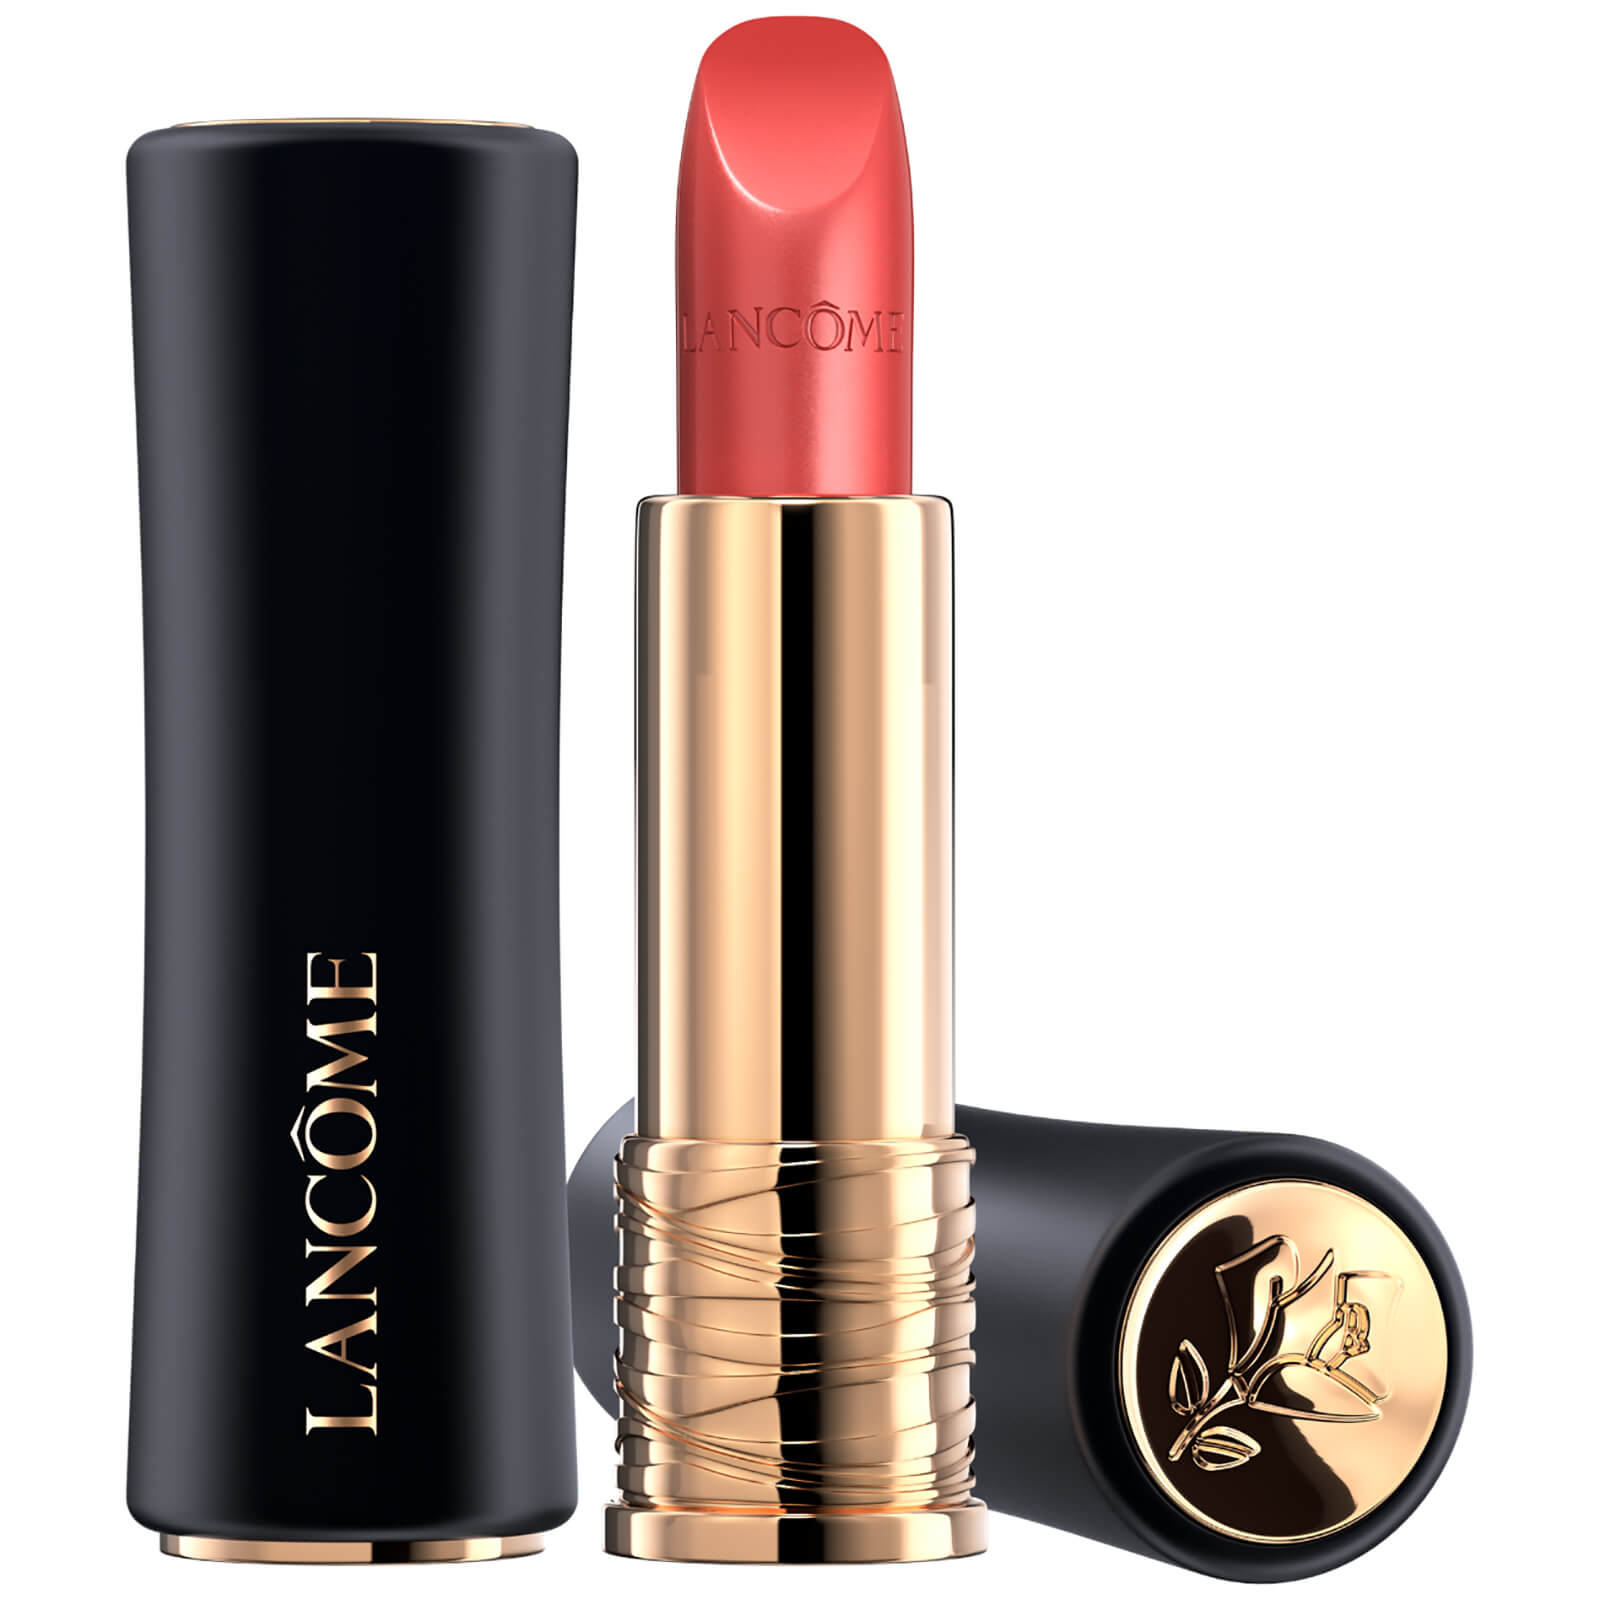 Lancôme L'Absolu Rouge Cream Lipstick 35ml (Various Shades) - 350 Destination Honfleur